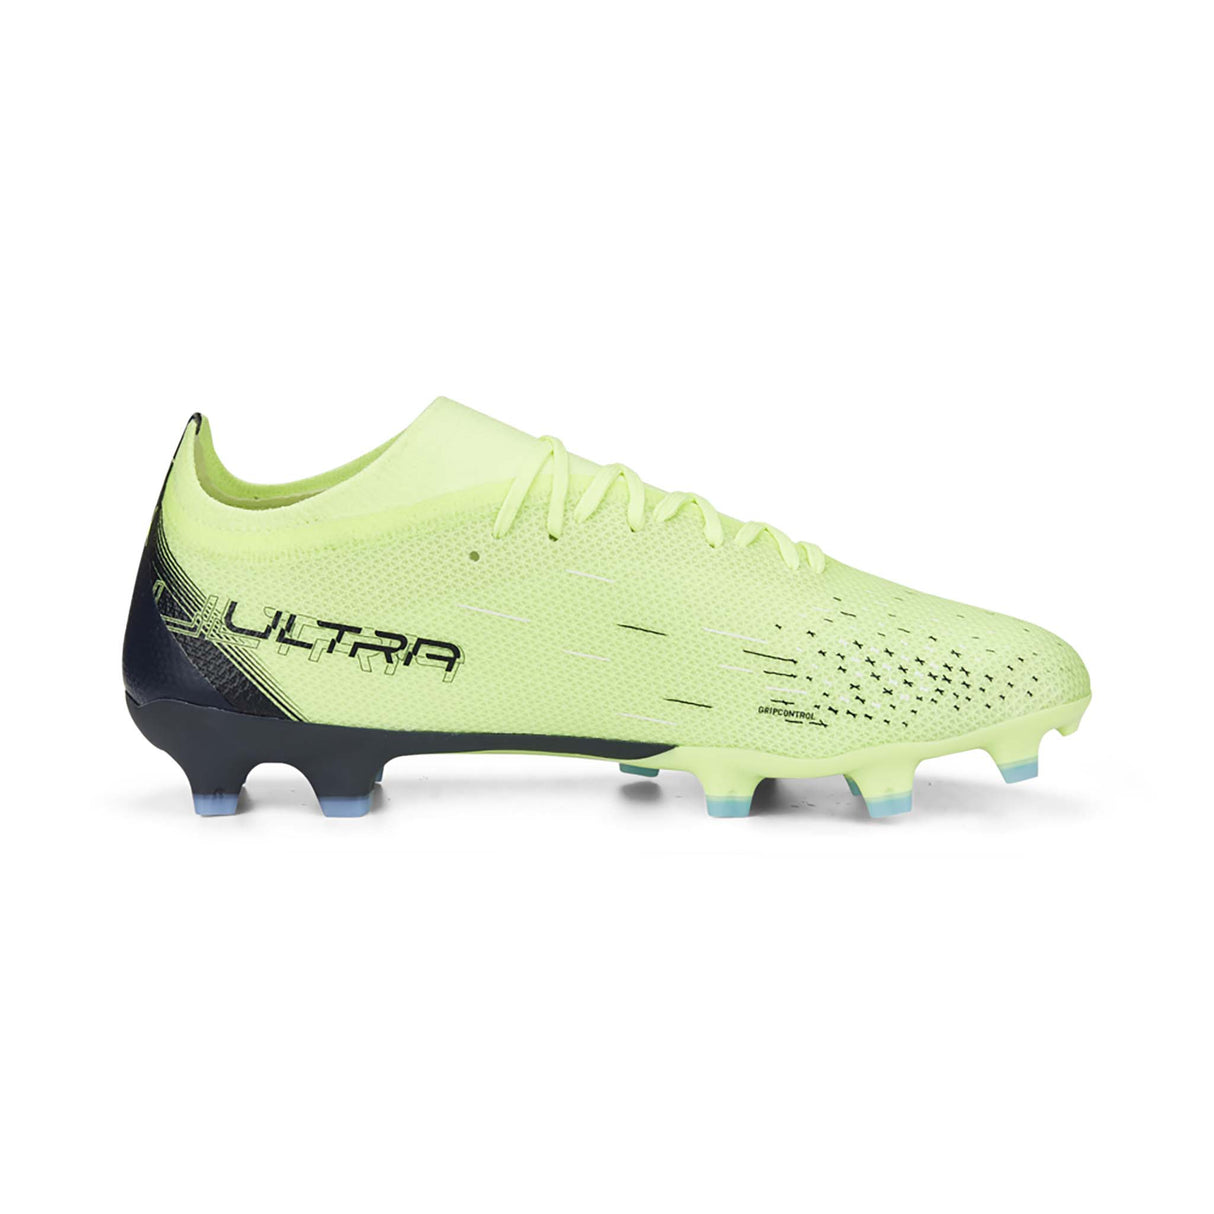 Puma Ultra Match FG/AG souliers de soccer fizzy light parisian night lateral